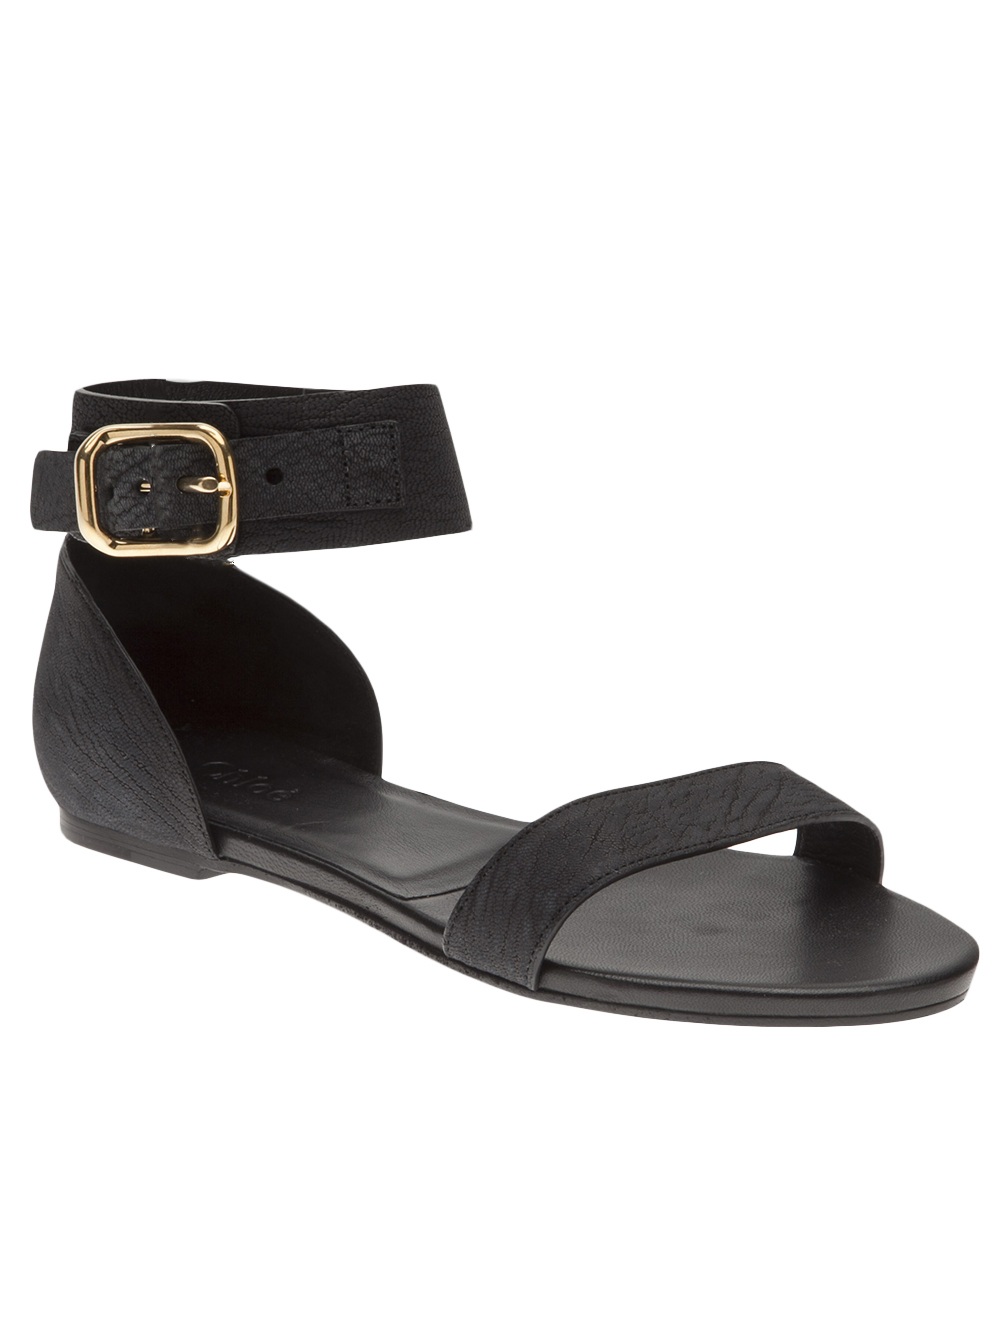 Chloé Simple Flat Sandal in Black | Lyst